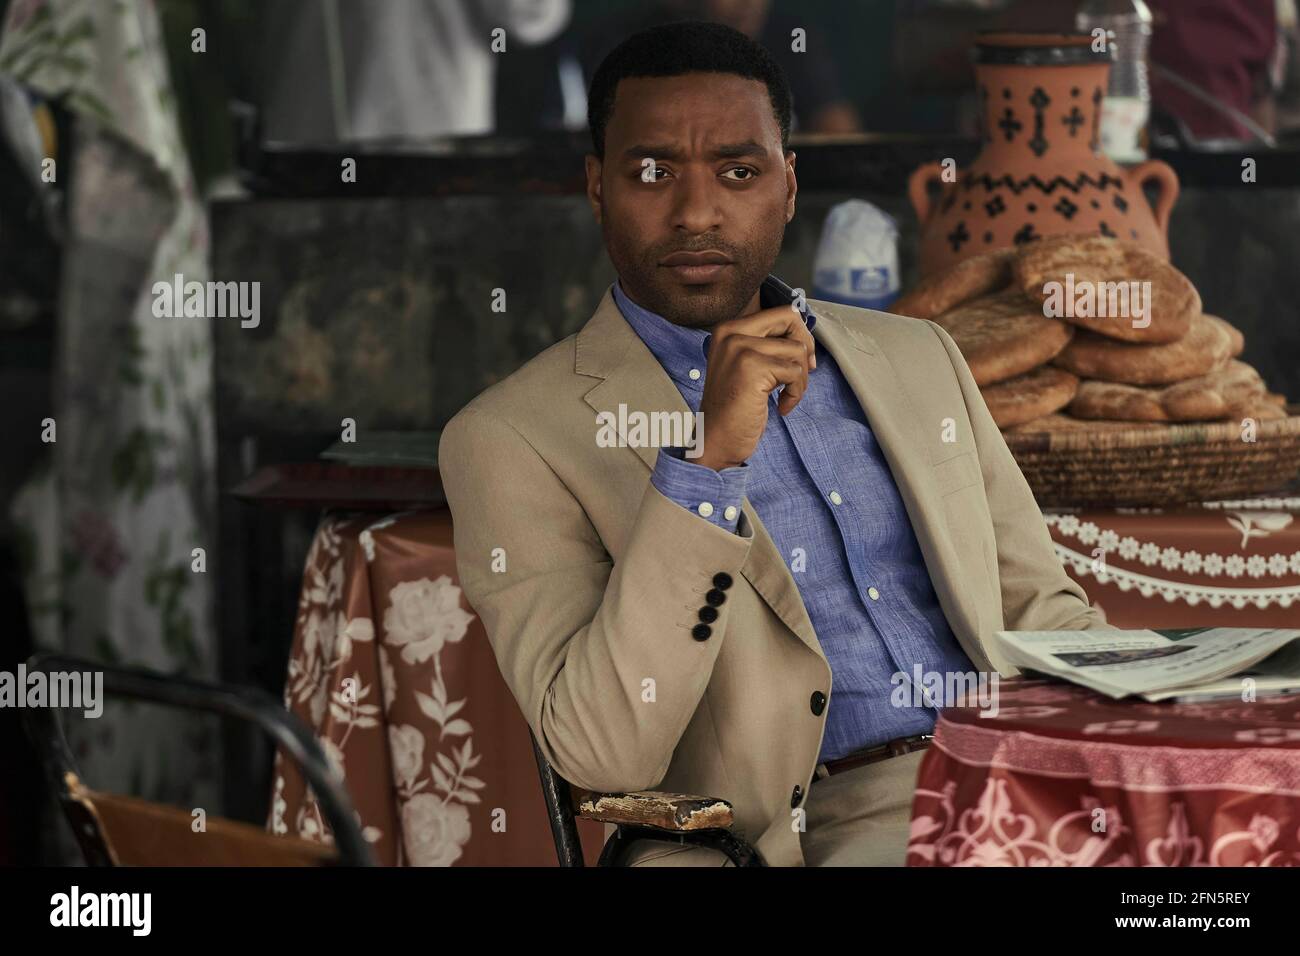 The Old Guard (película de 2020), protagonizada por Chiwetel Ejiofor como James Copley Foto de stock